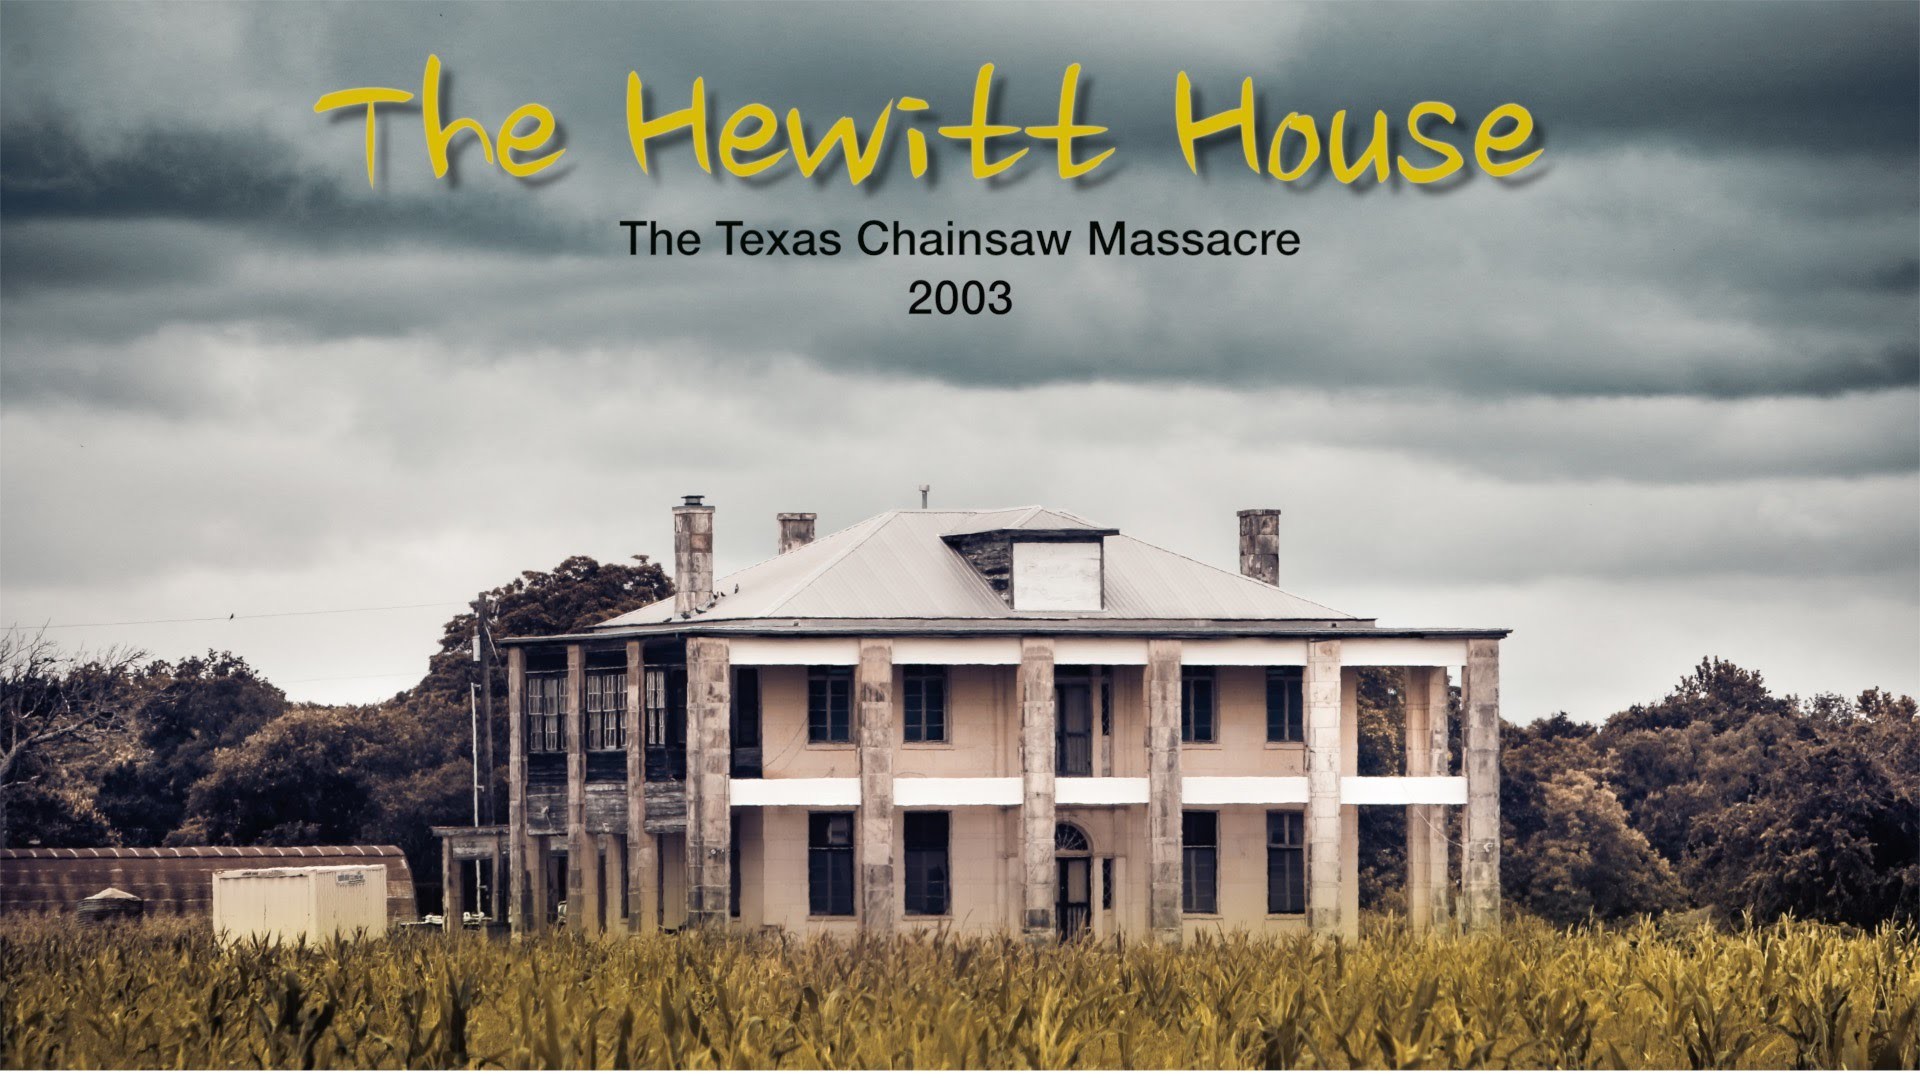 1920x1080 Movie Locations - The Texas Chainsaw Massacre 2003 - Hewitt House -  Granger, Texas - YouTube